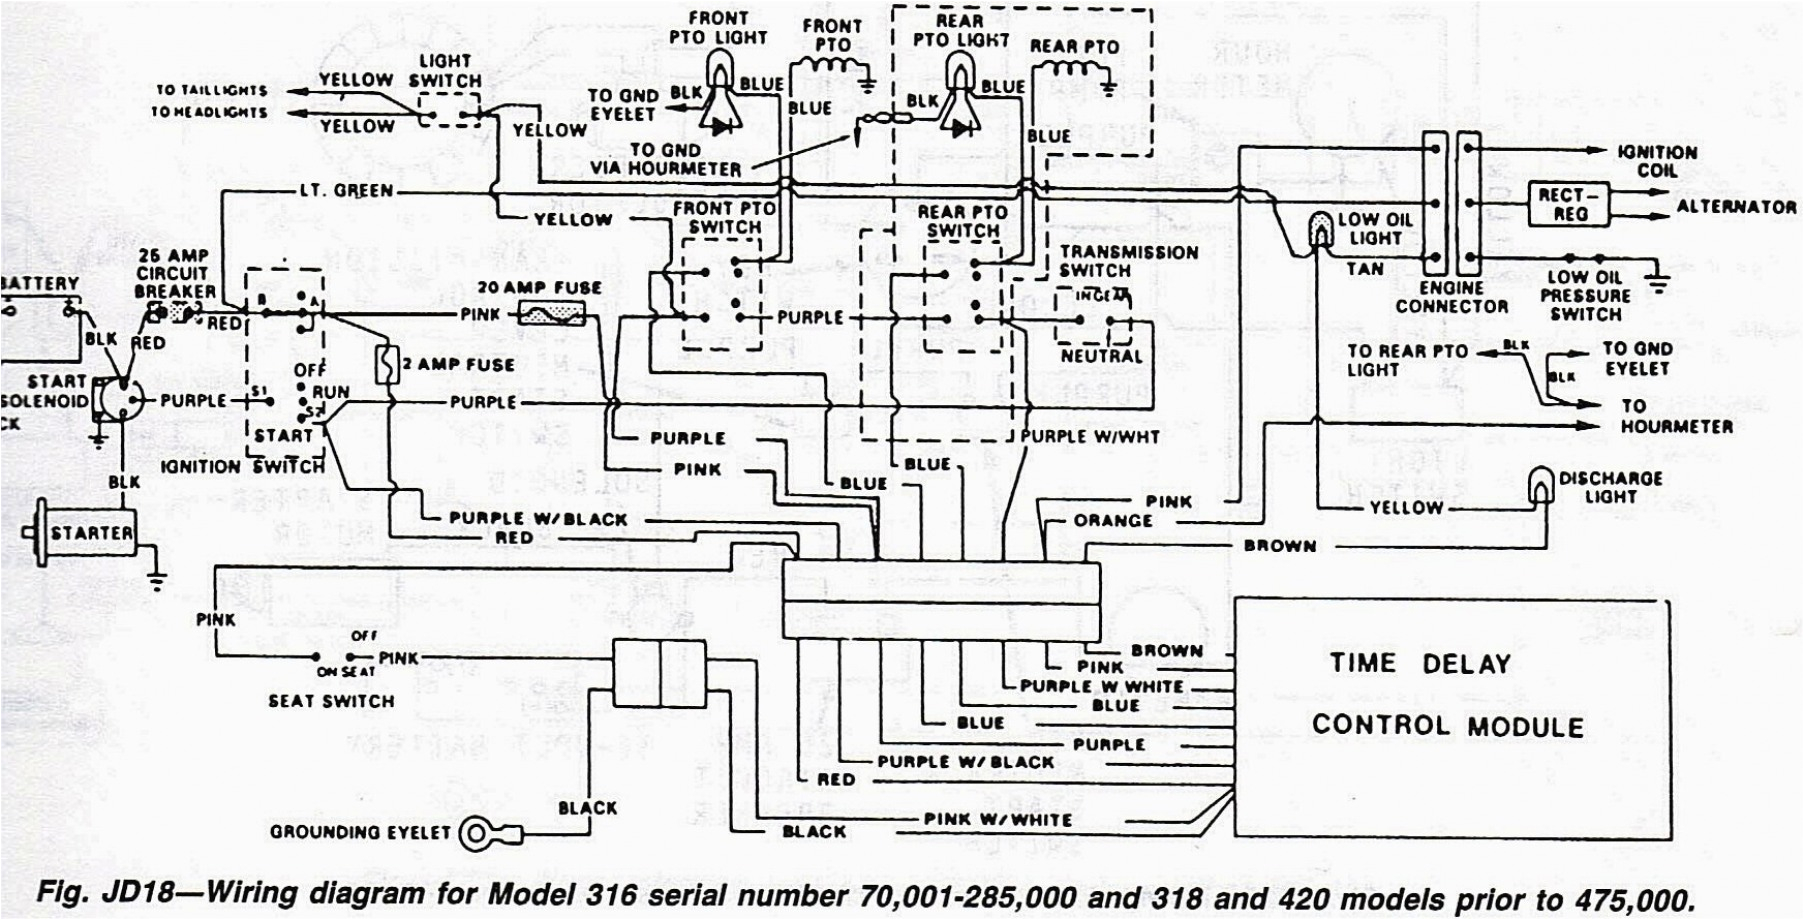 580 e wiring diagram wiring diagram repair guides580k wiring diagram wiring librarycase 580b wiring diagram 580